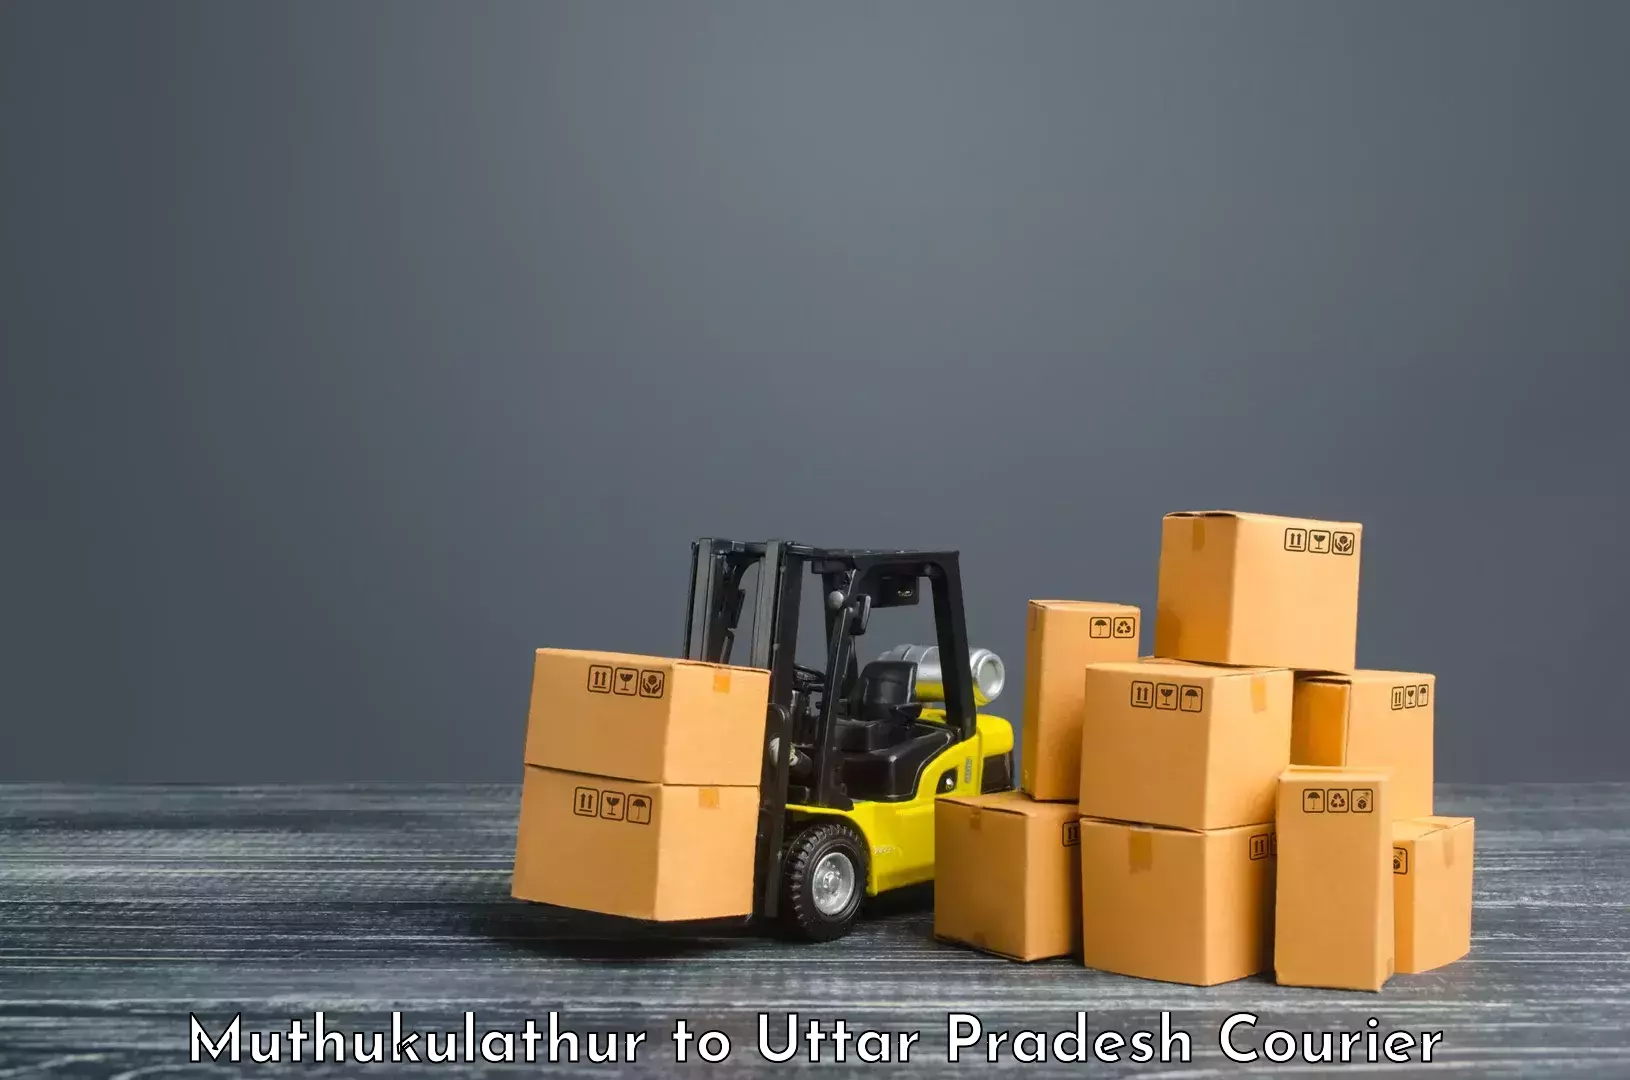 Customer-centric shipping Muthukulathur to Uttar Pradesh